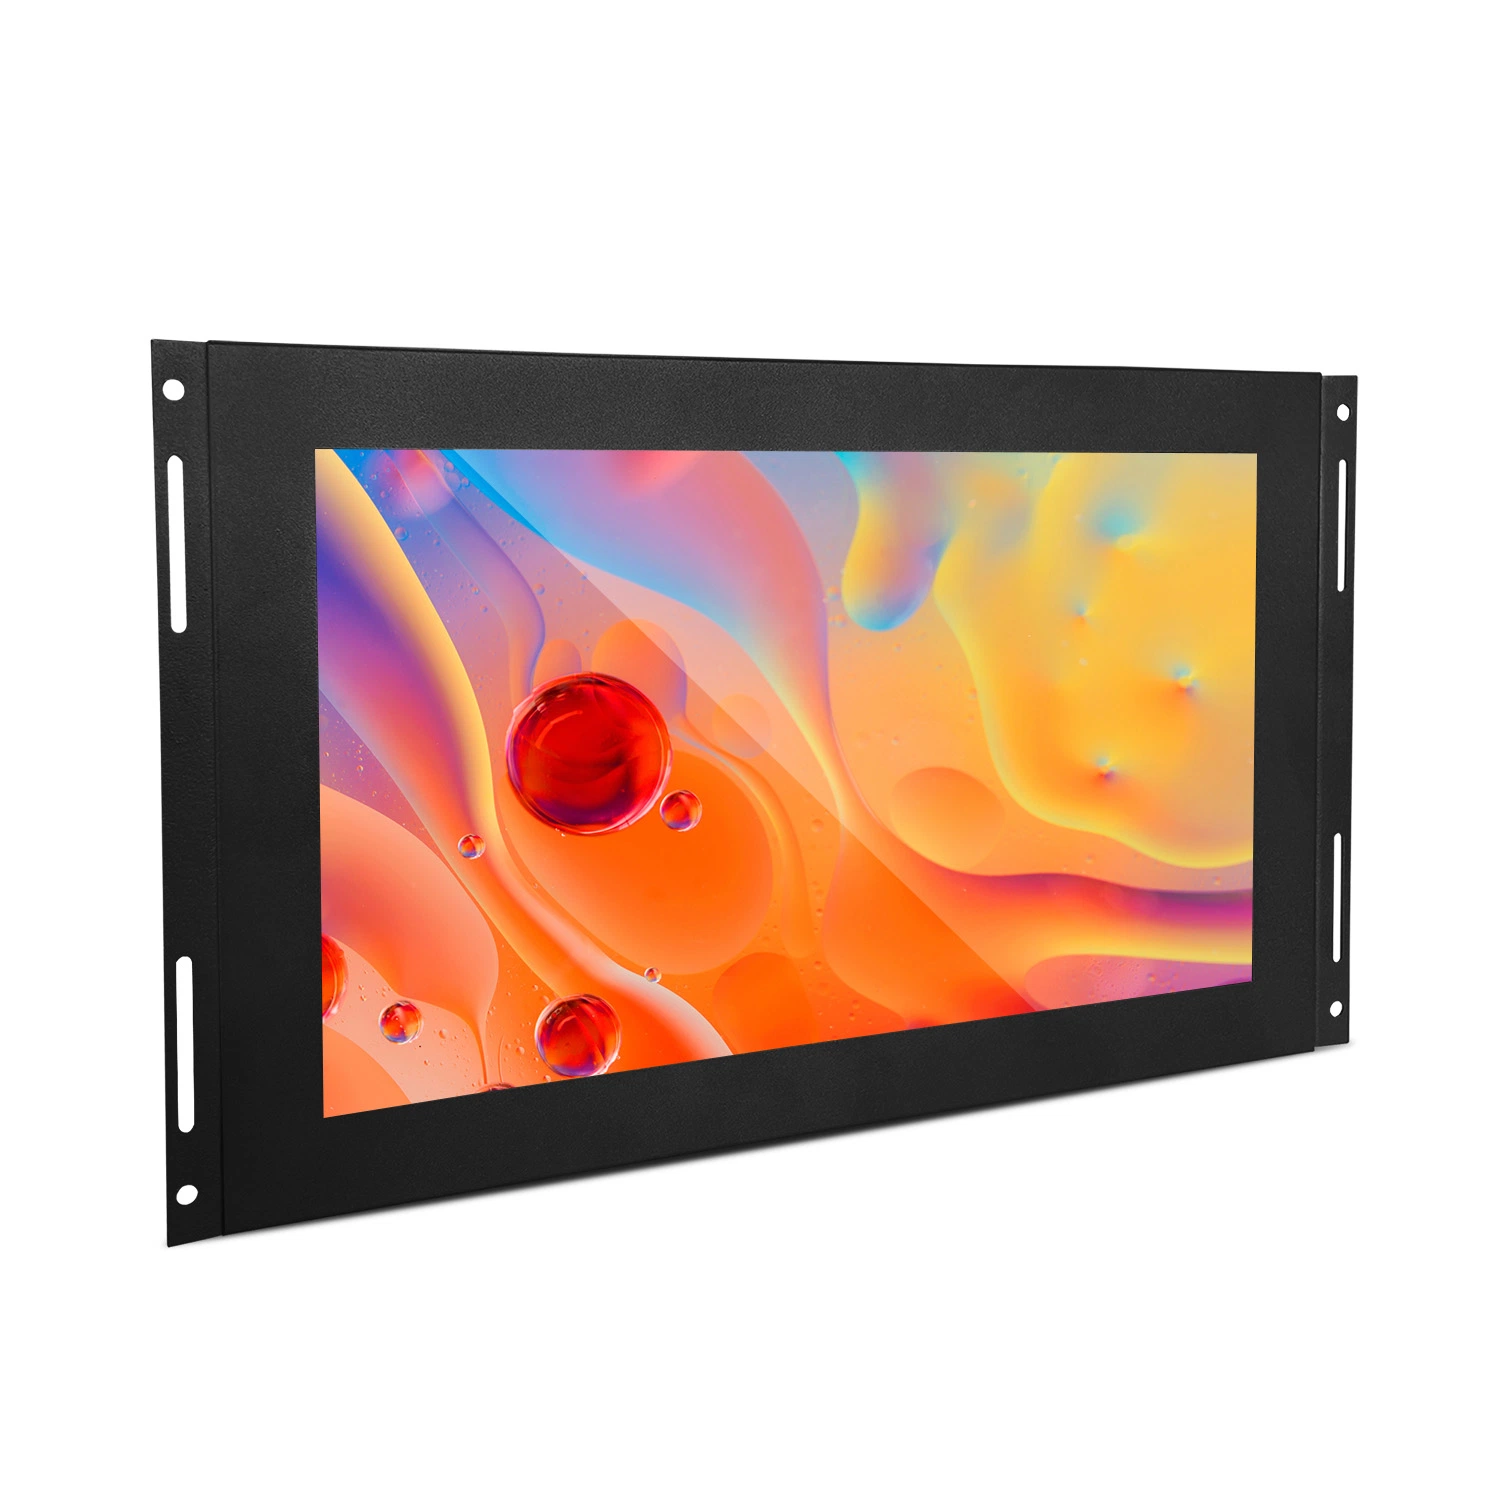 1920*1080pixel Schwarz/Weiß/Customize Industrial Capacitive Open Frame LCD Touchscreen Monitor